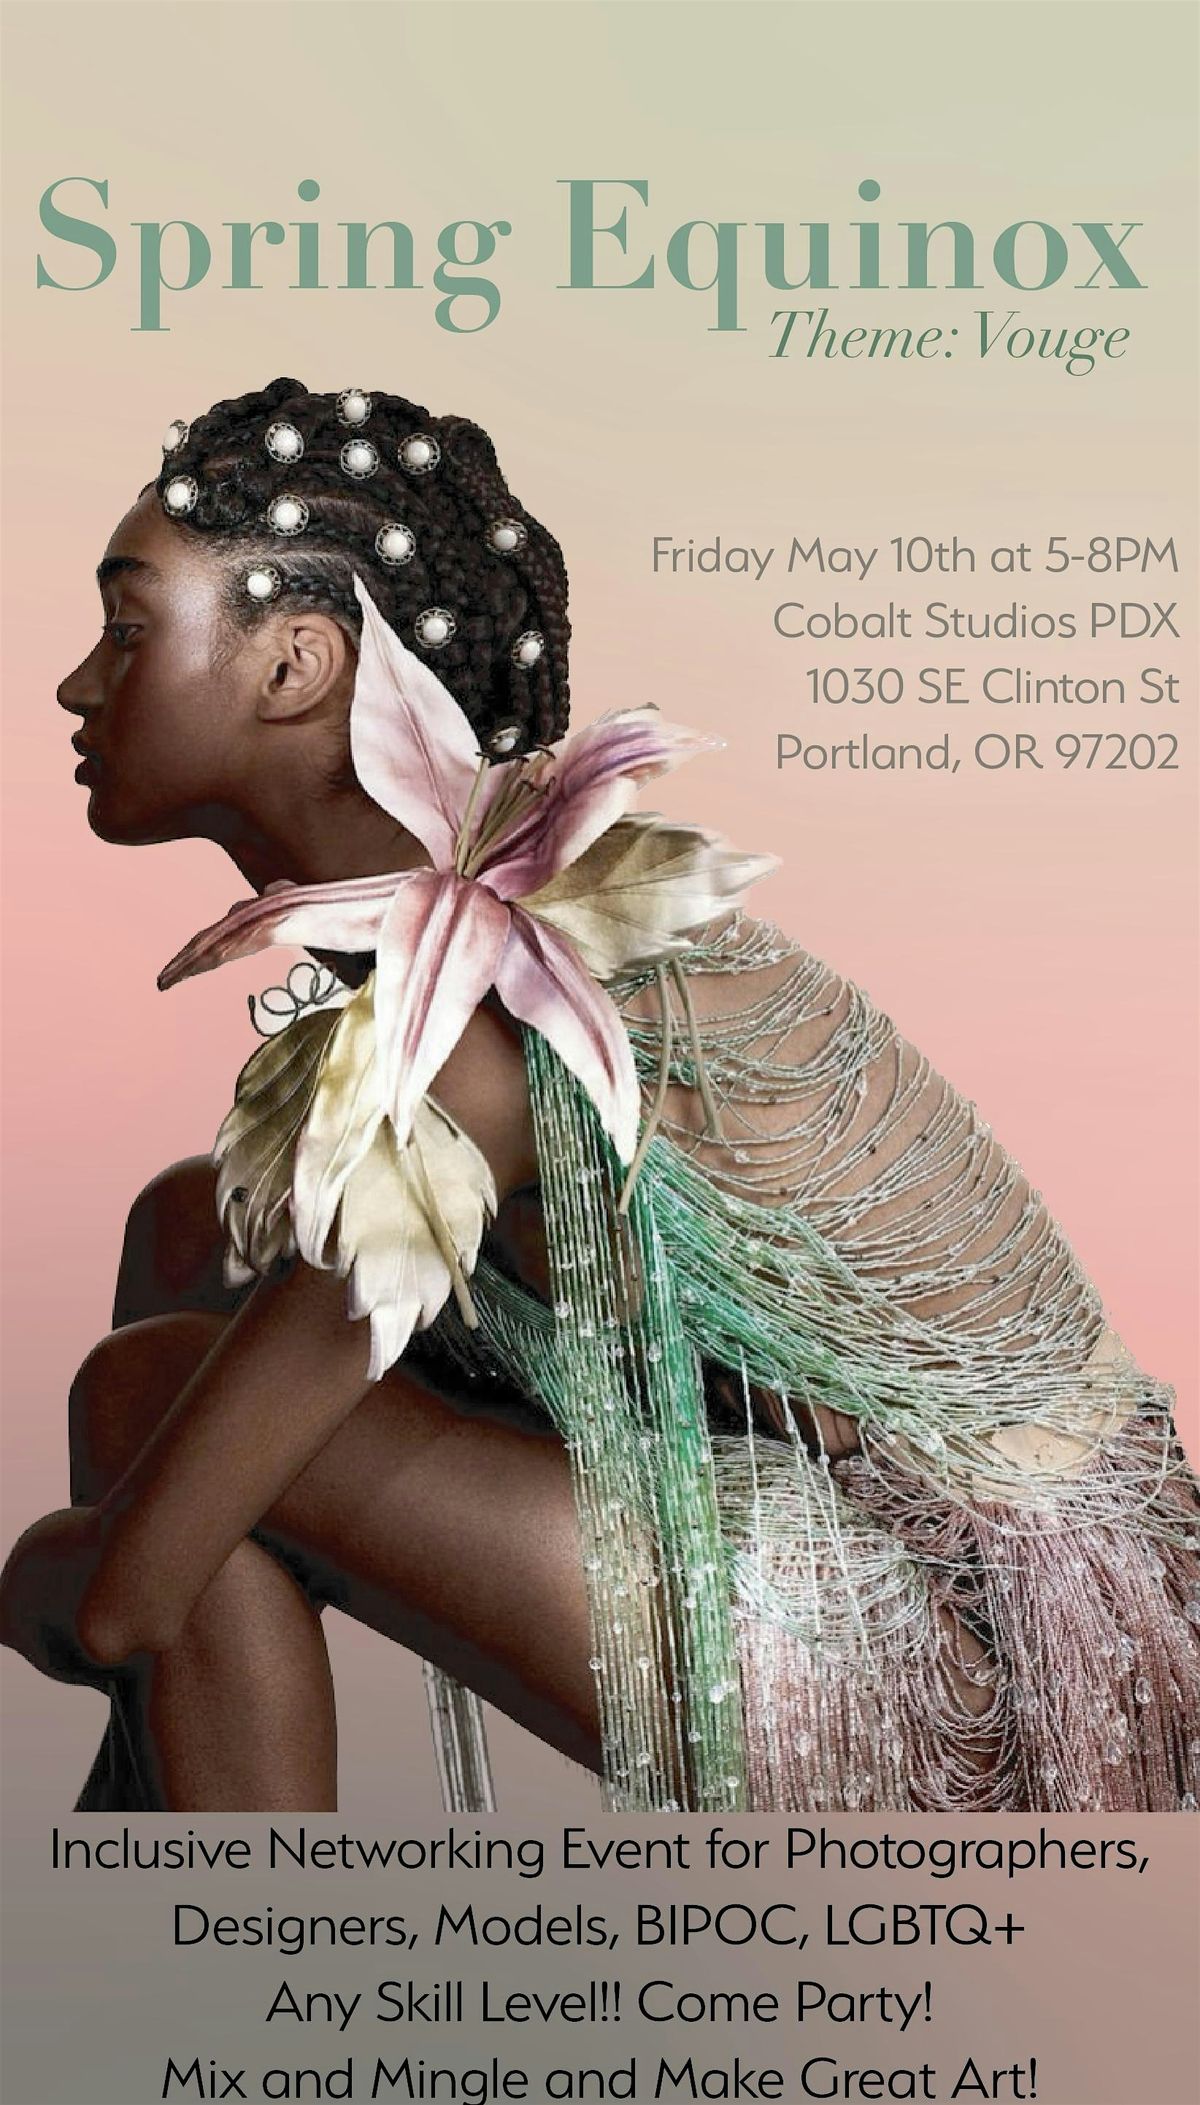 Spring Equinox: Fashion Photoshoot & Networking Event